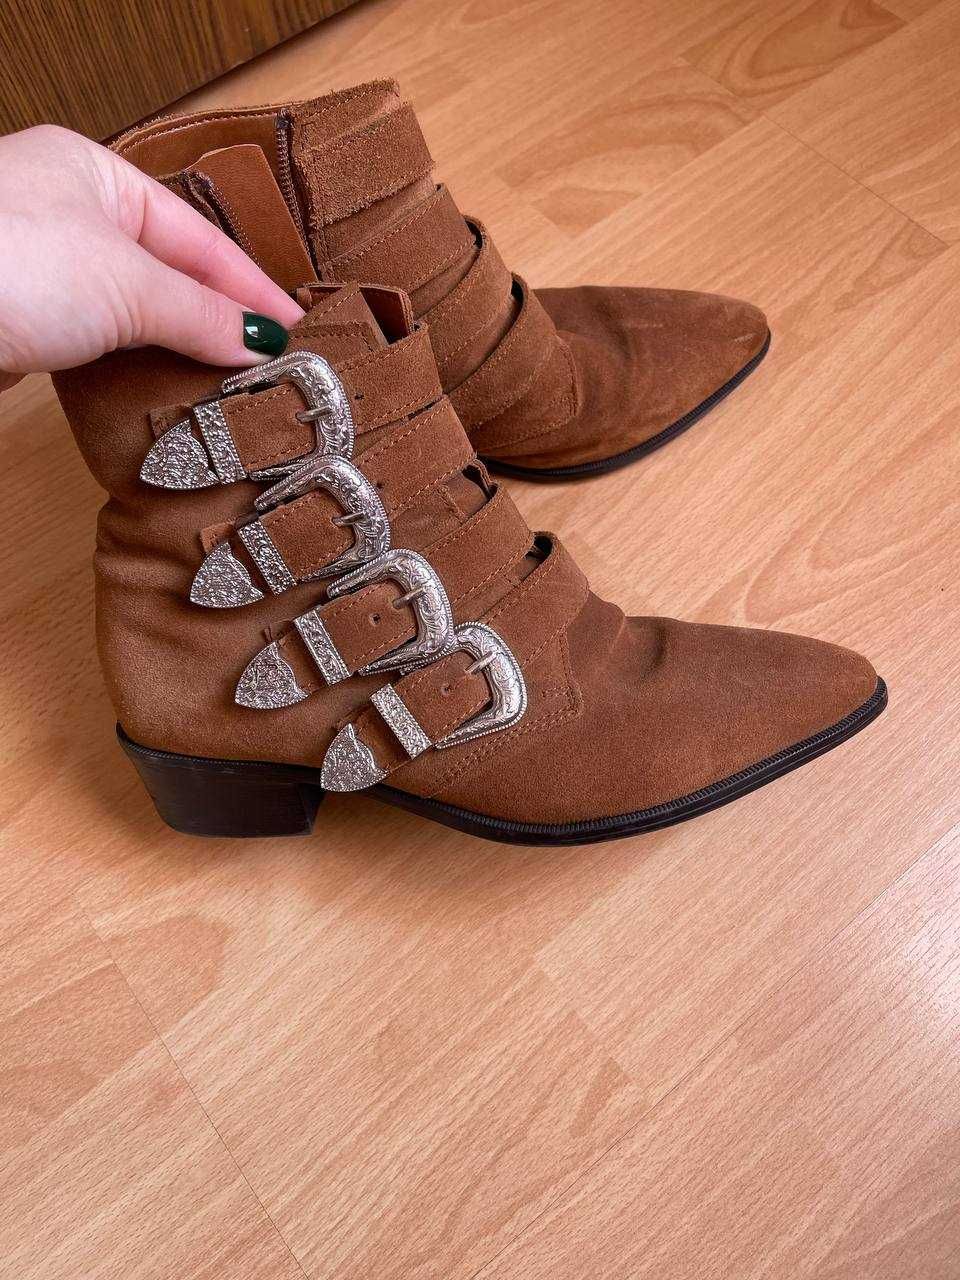 Козаки Zara, ботинки черевики чоботи кожание сапоги